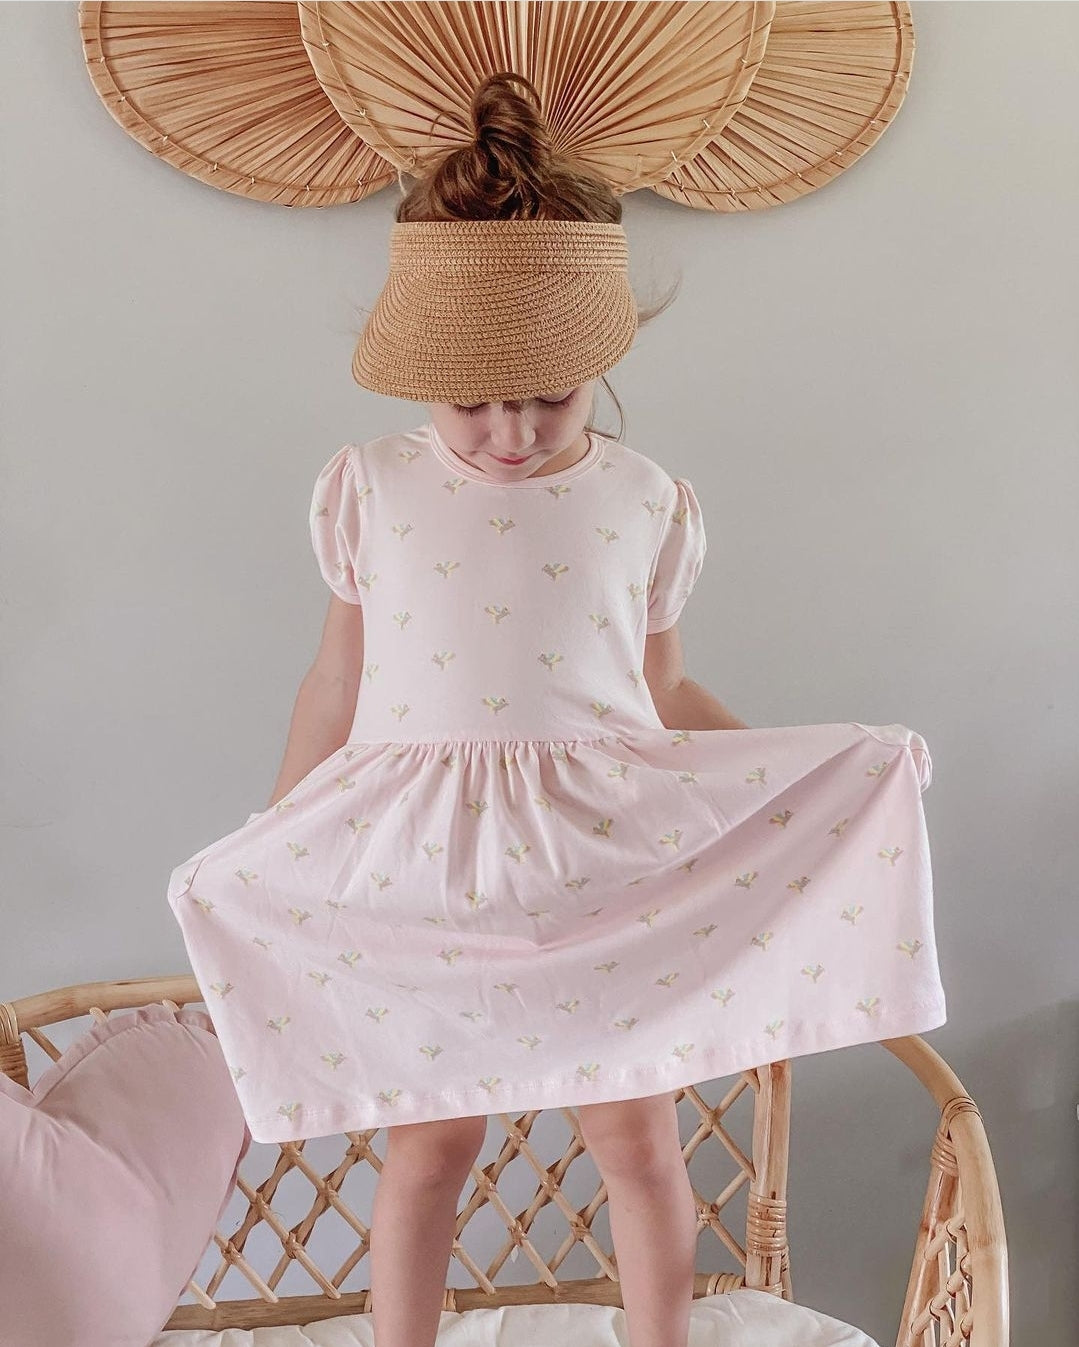 Korango | Unicorn Frill Cotton Frill Dress | Light Pink Size 8Y